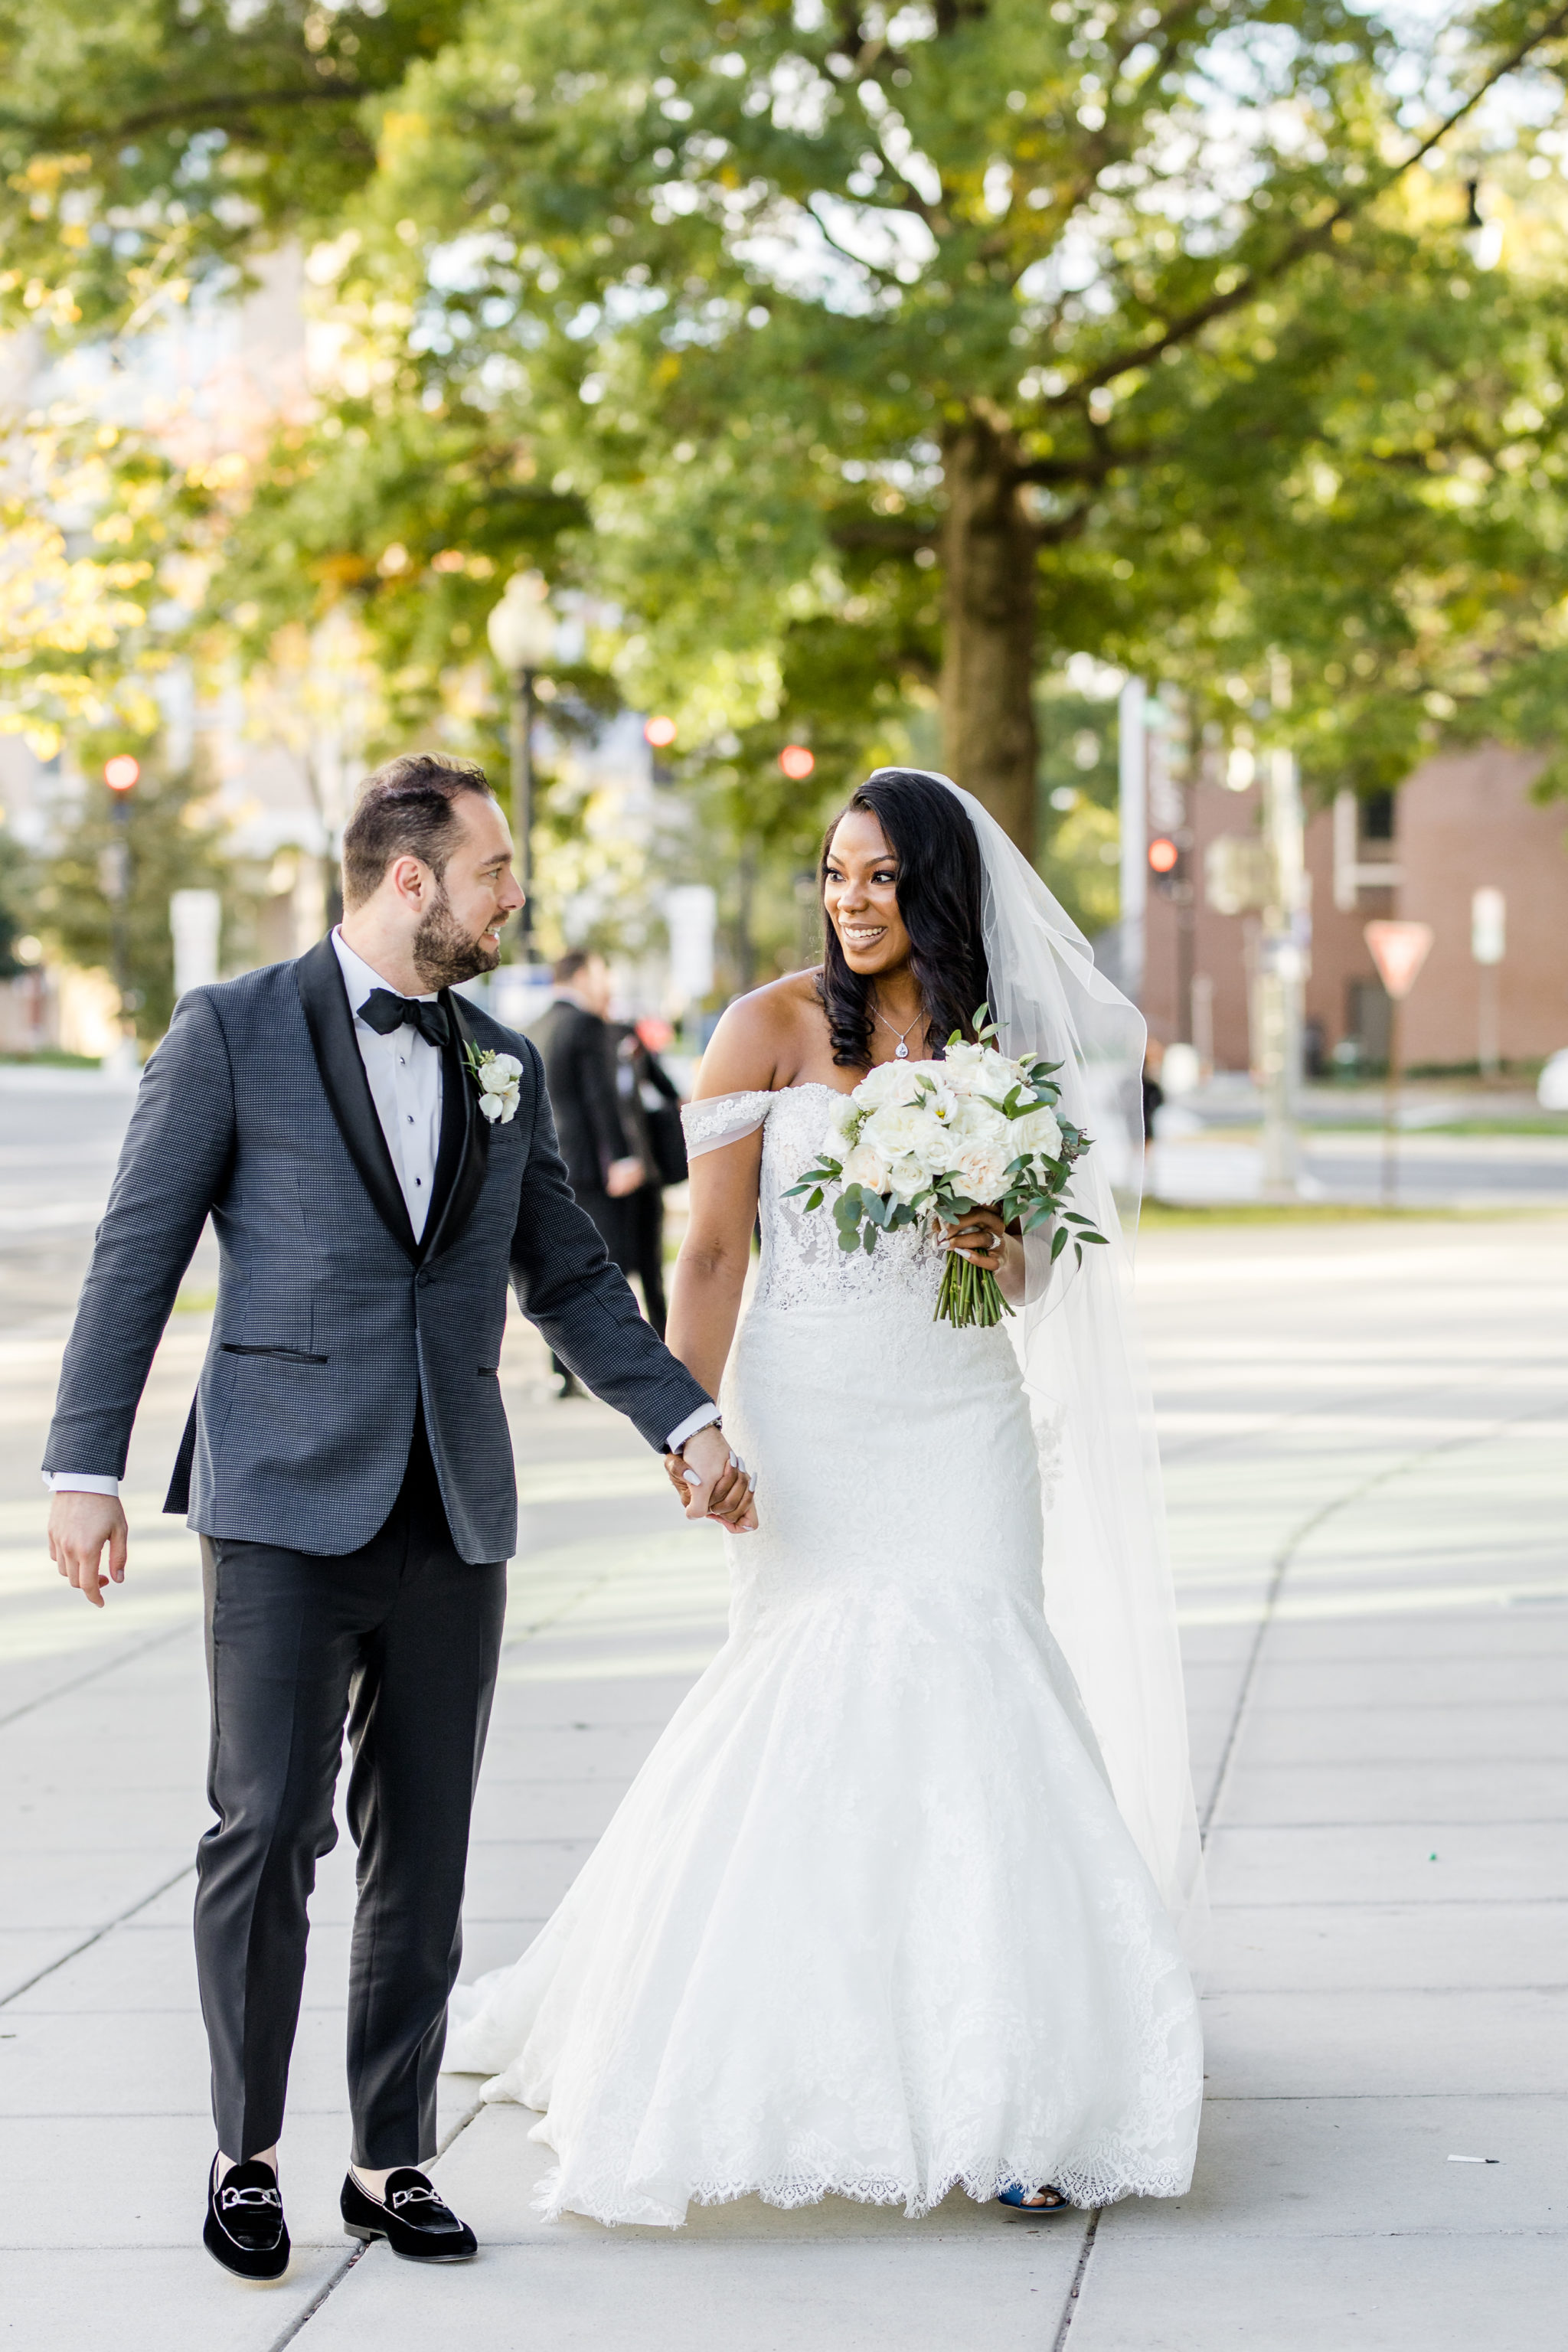 This Glitzy Big Day Is Filled With Geometric Wedding Ideas - Washingtonian